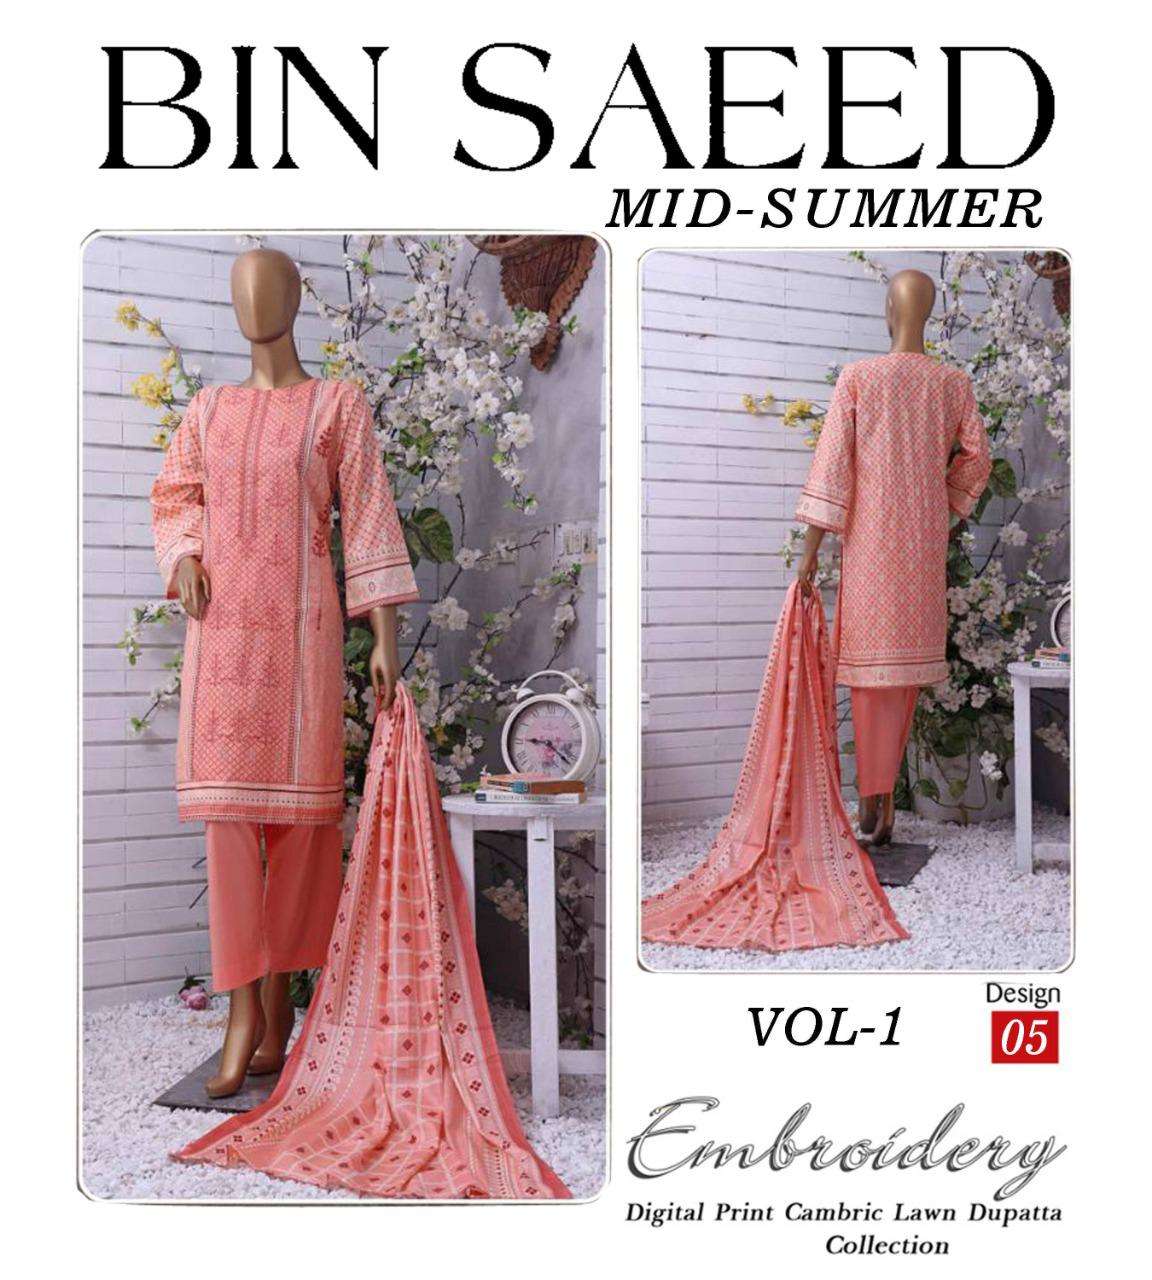 bin seed mid summer vol-1 01-10 series exclusive designer digital embroidred pakisatni salwar kameez wholesaler surat